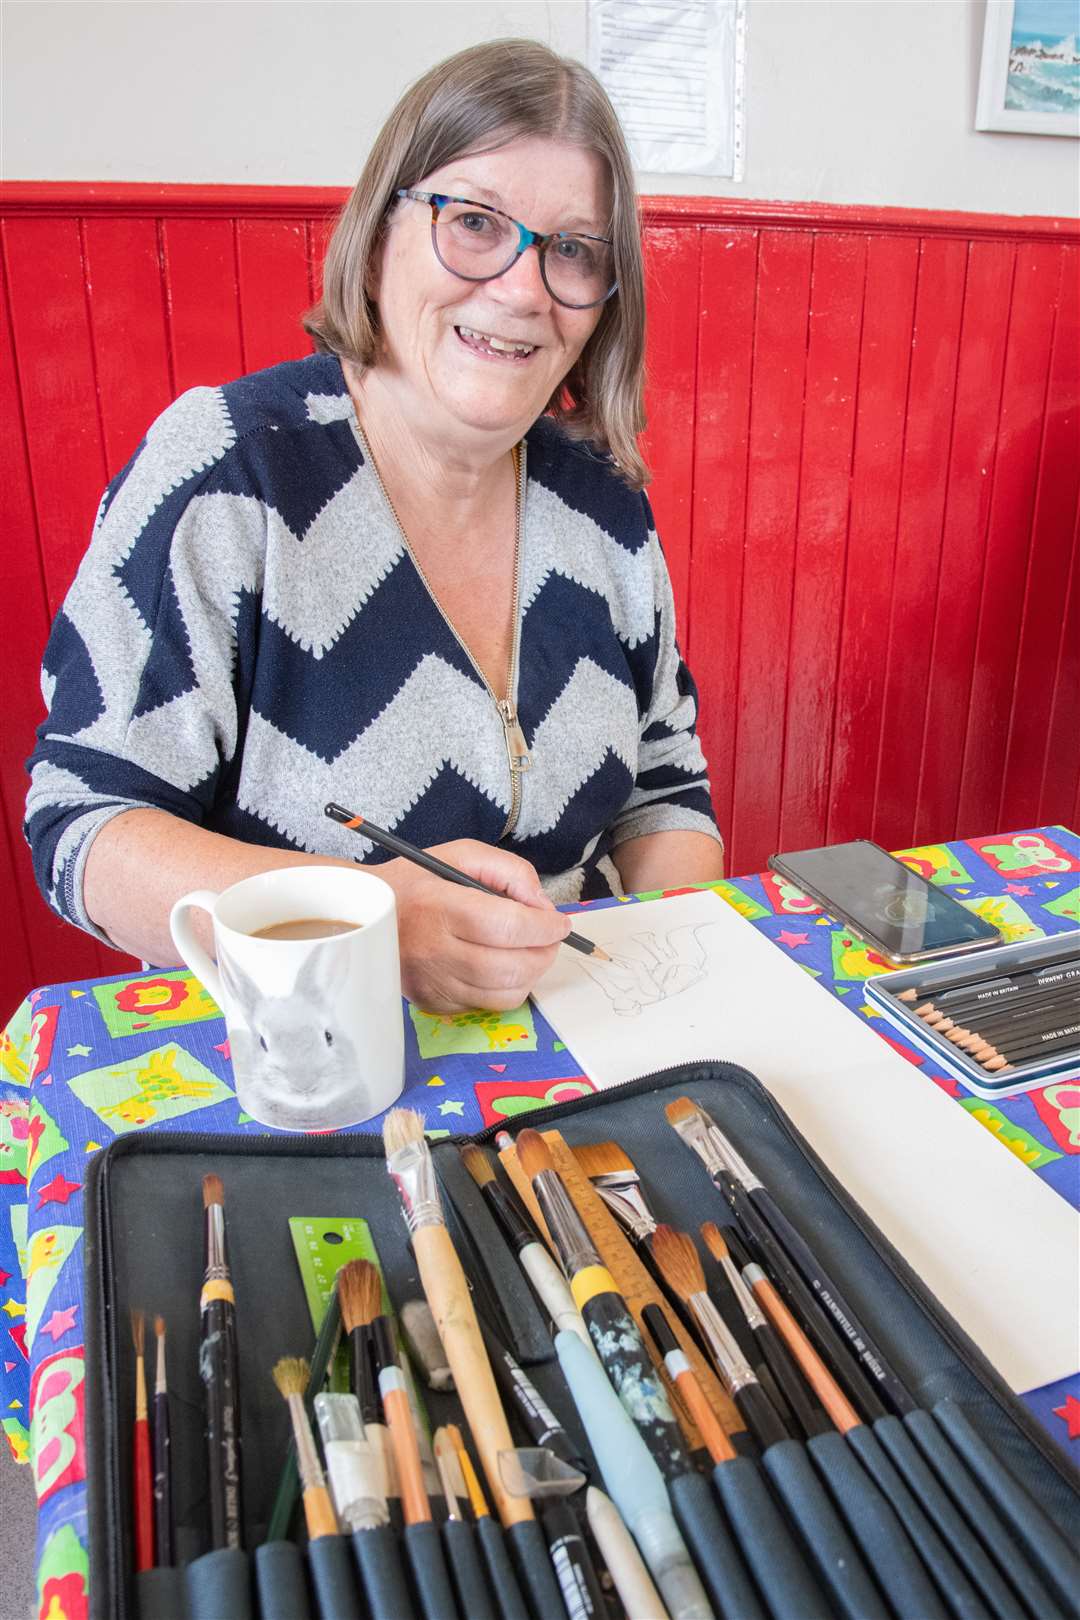 Doing a bit of pencil work is Caroline Bruce. Picture: Daniel Forsyth